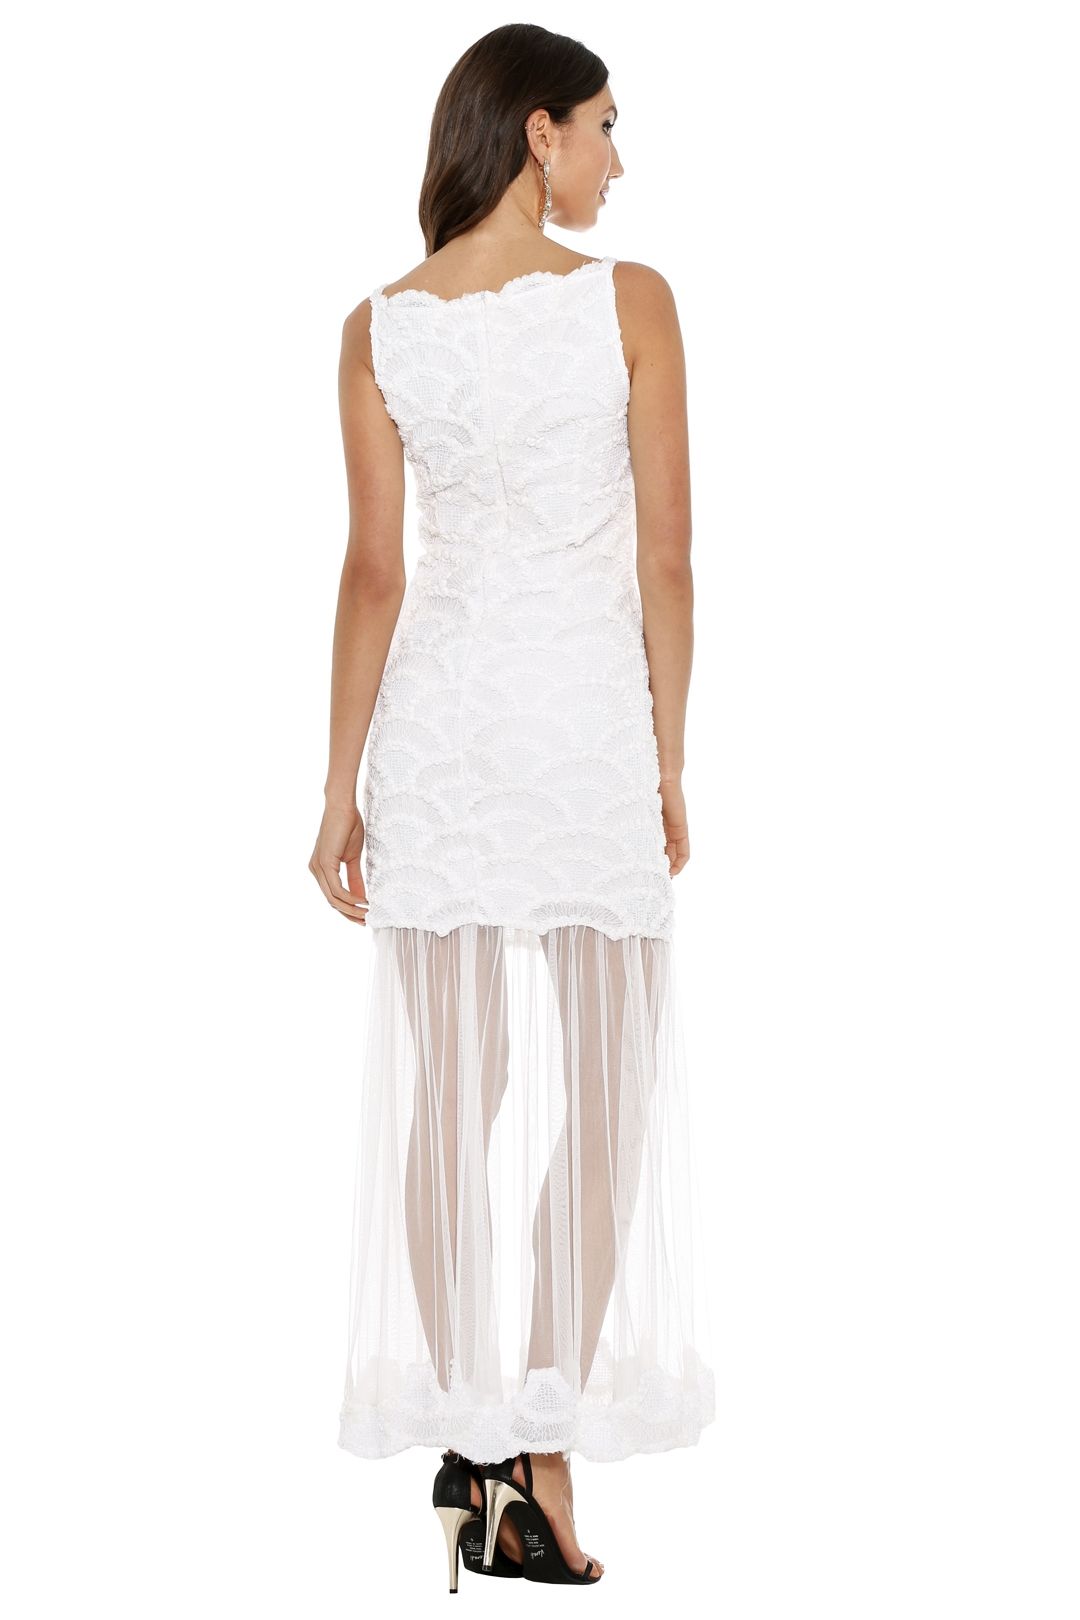 Asilio - An English Summer Dress - White - Back